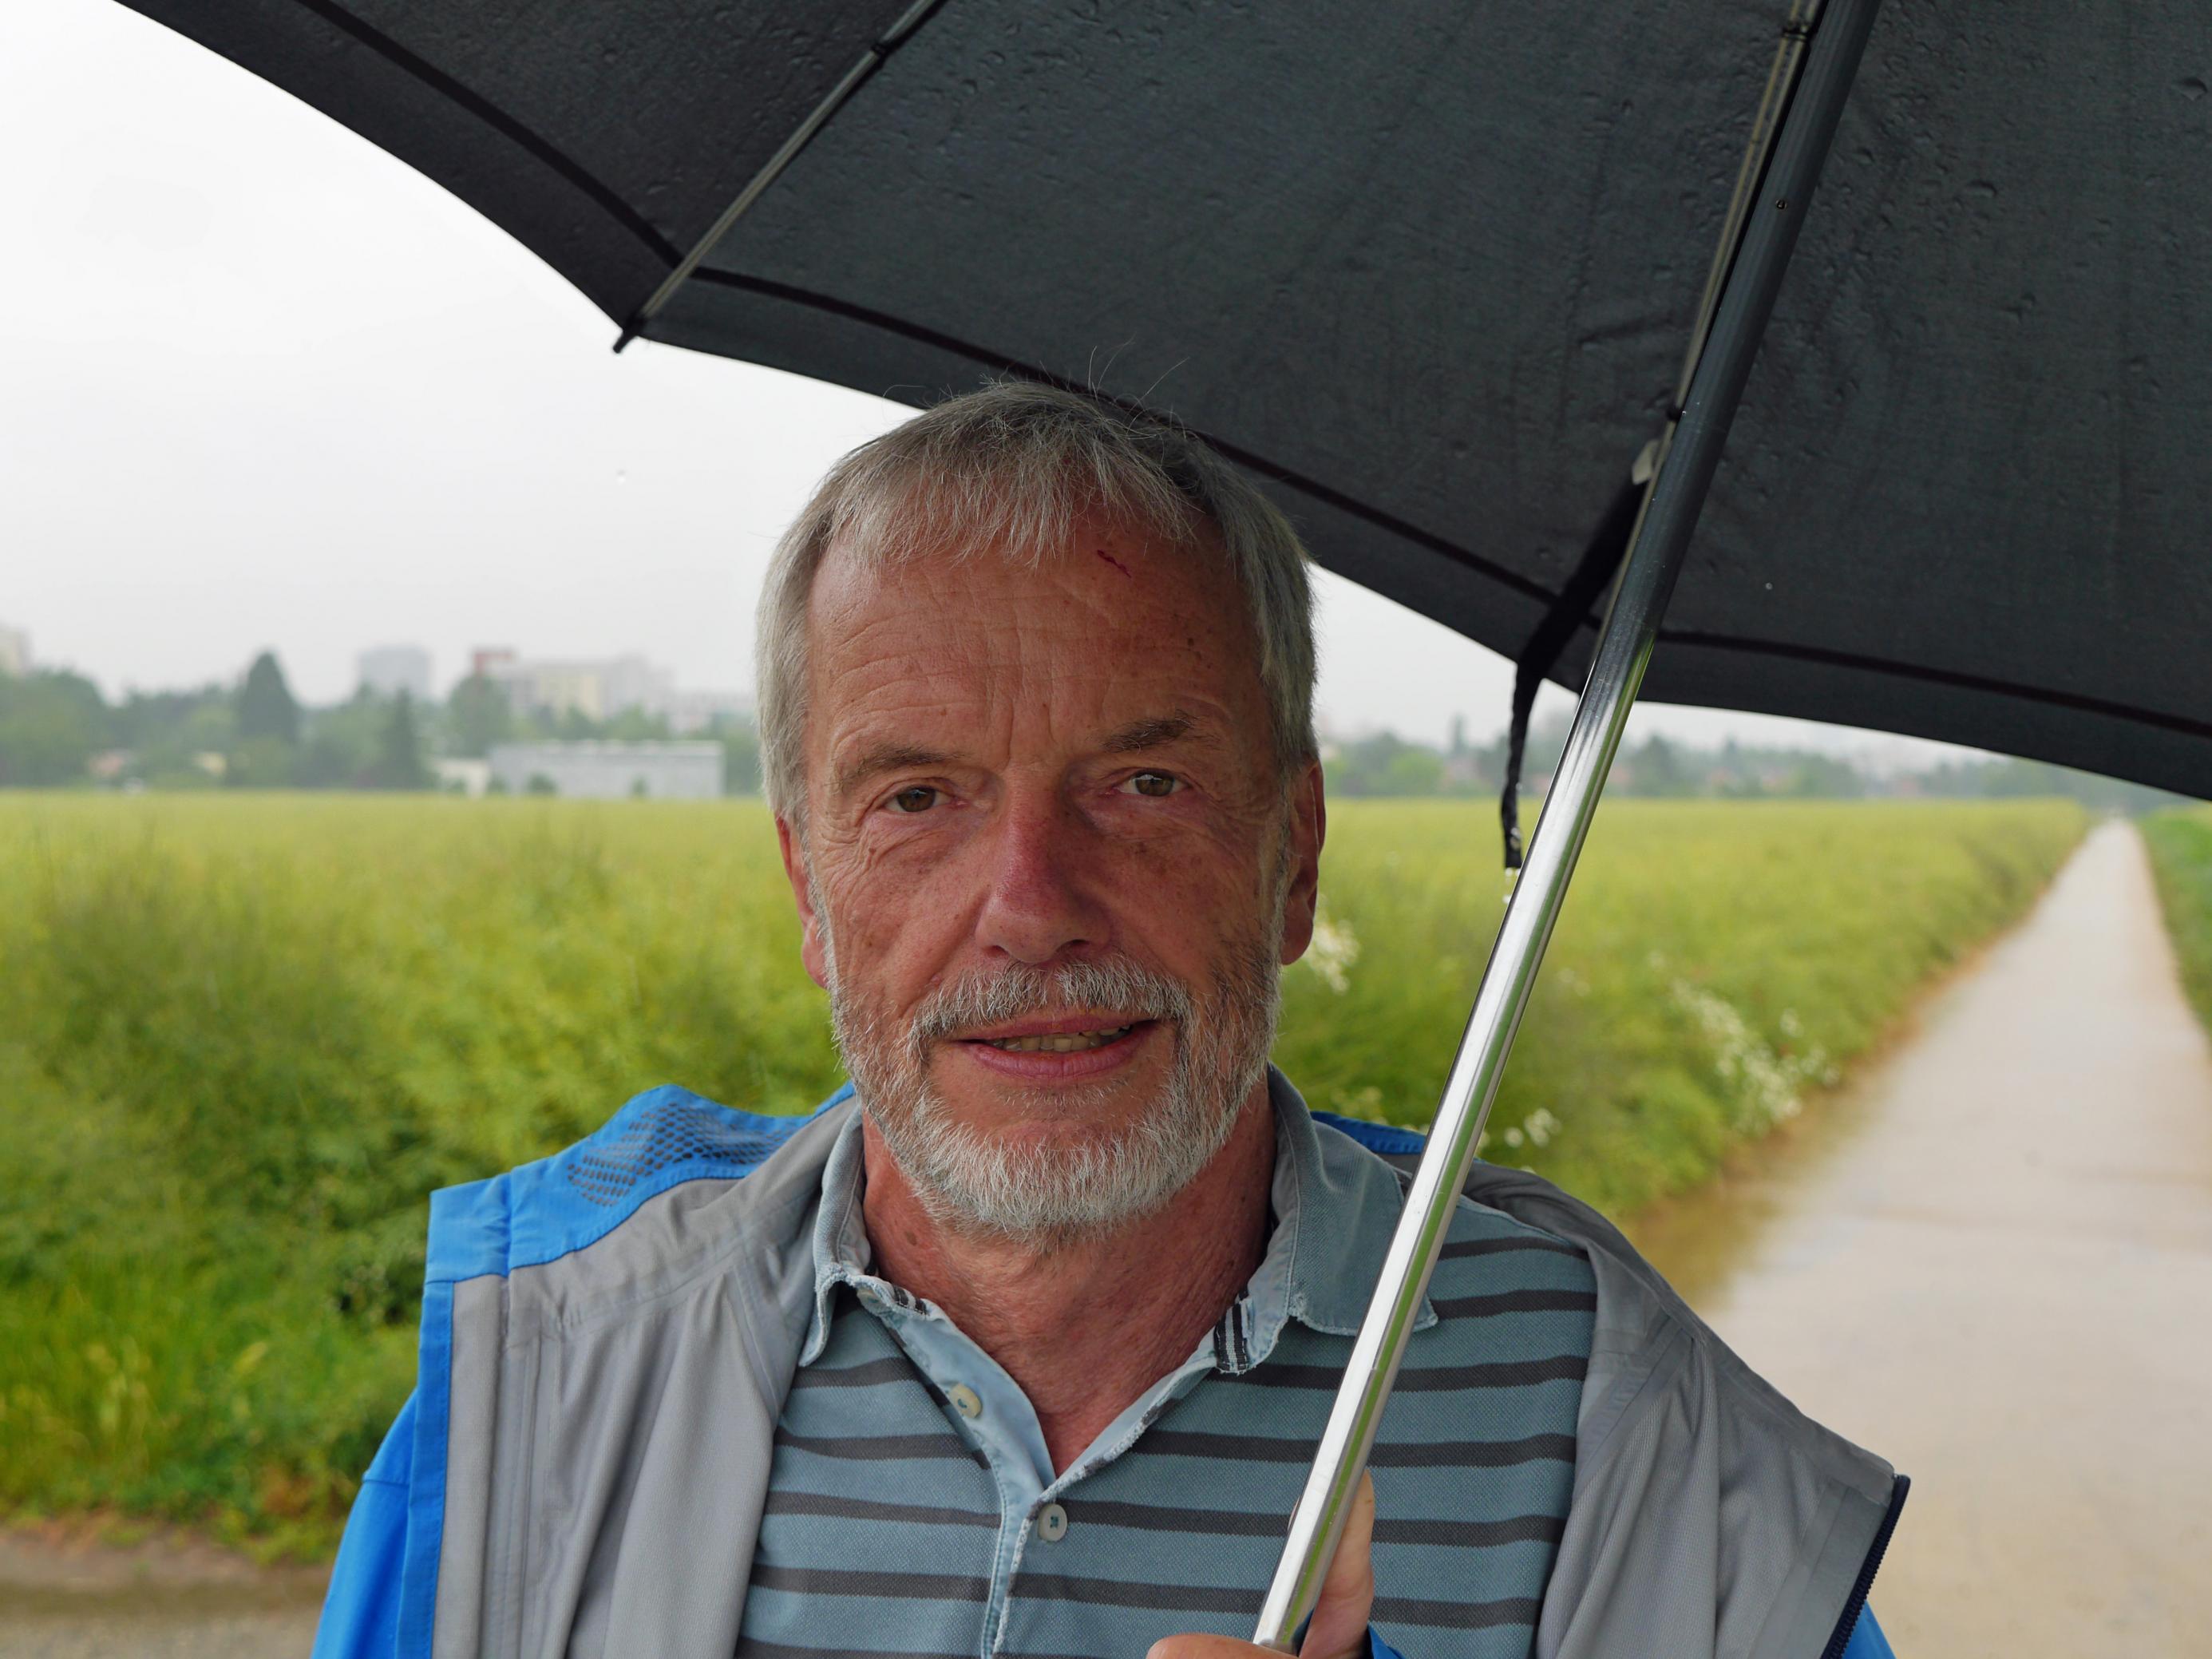 Mann mit Regenschirm vor grünem Feld